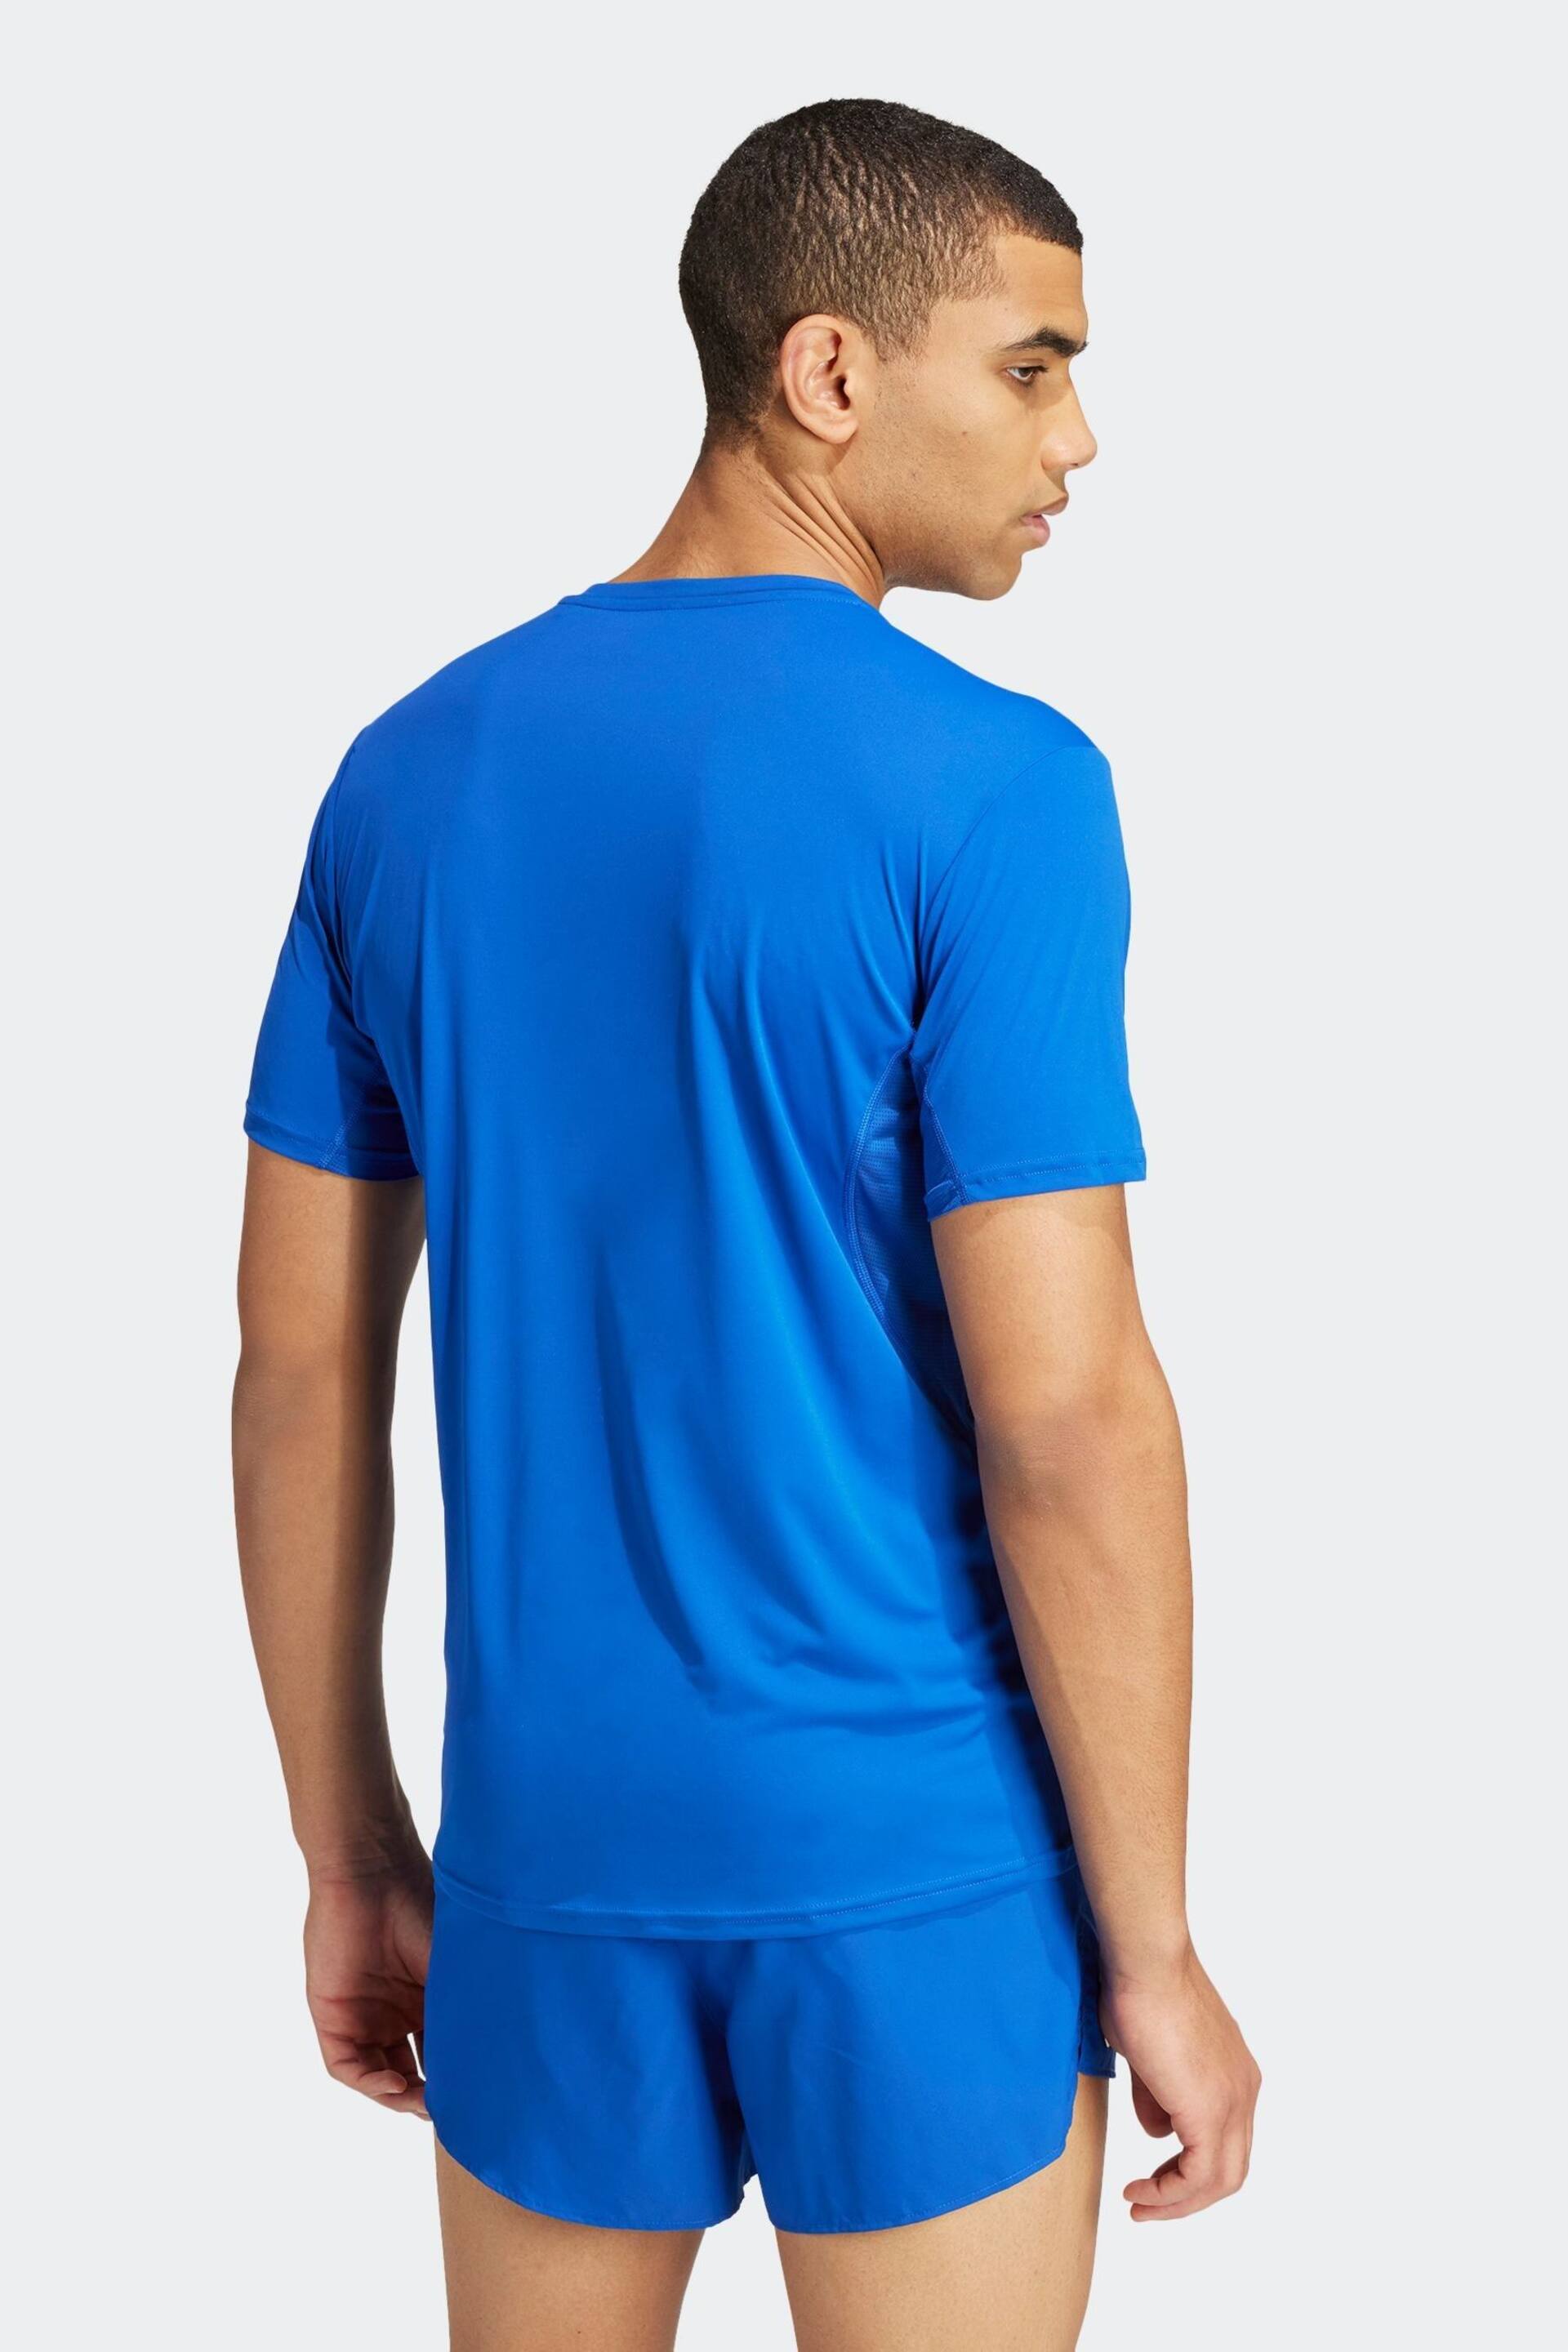 adidas Bright Blue Adizero Essentials Running T-Shirt - Image 2 of 17